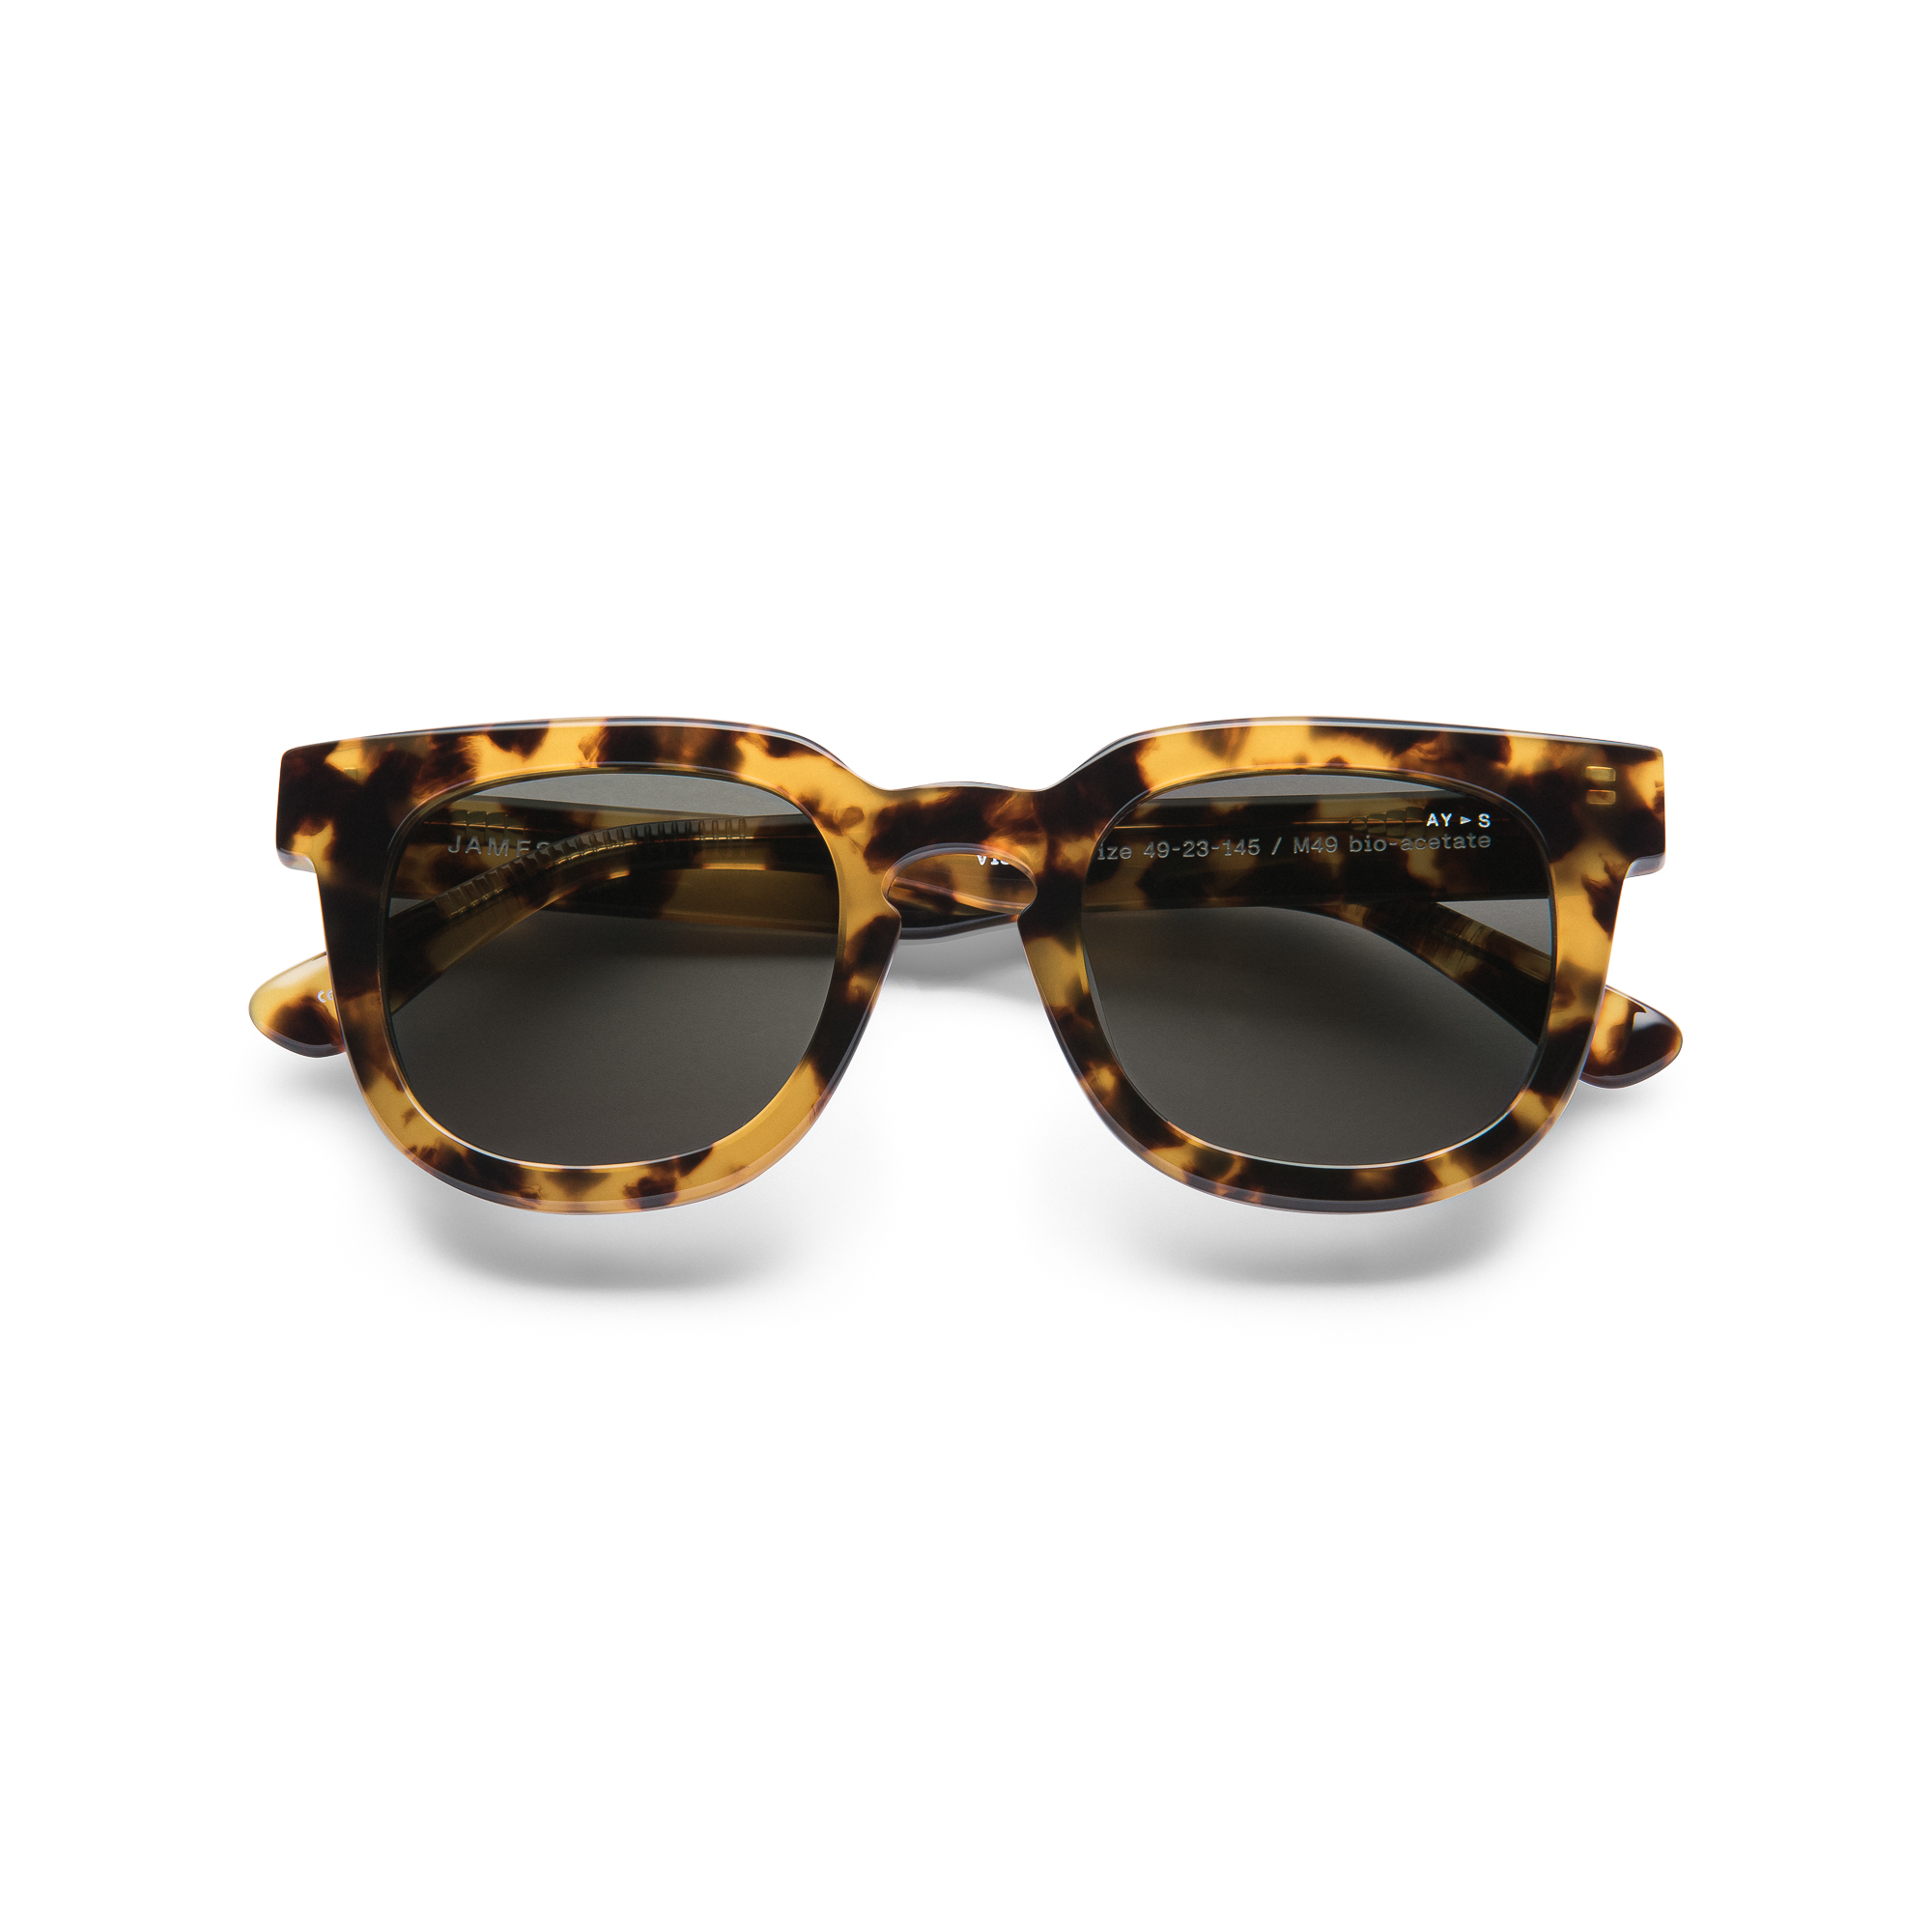 Buy Havana Sunglasses from James Ay - Buy Online